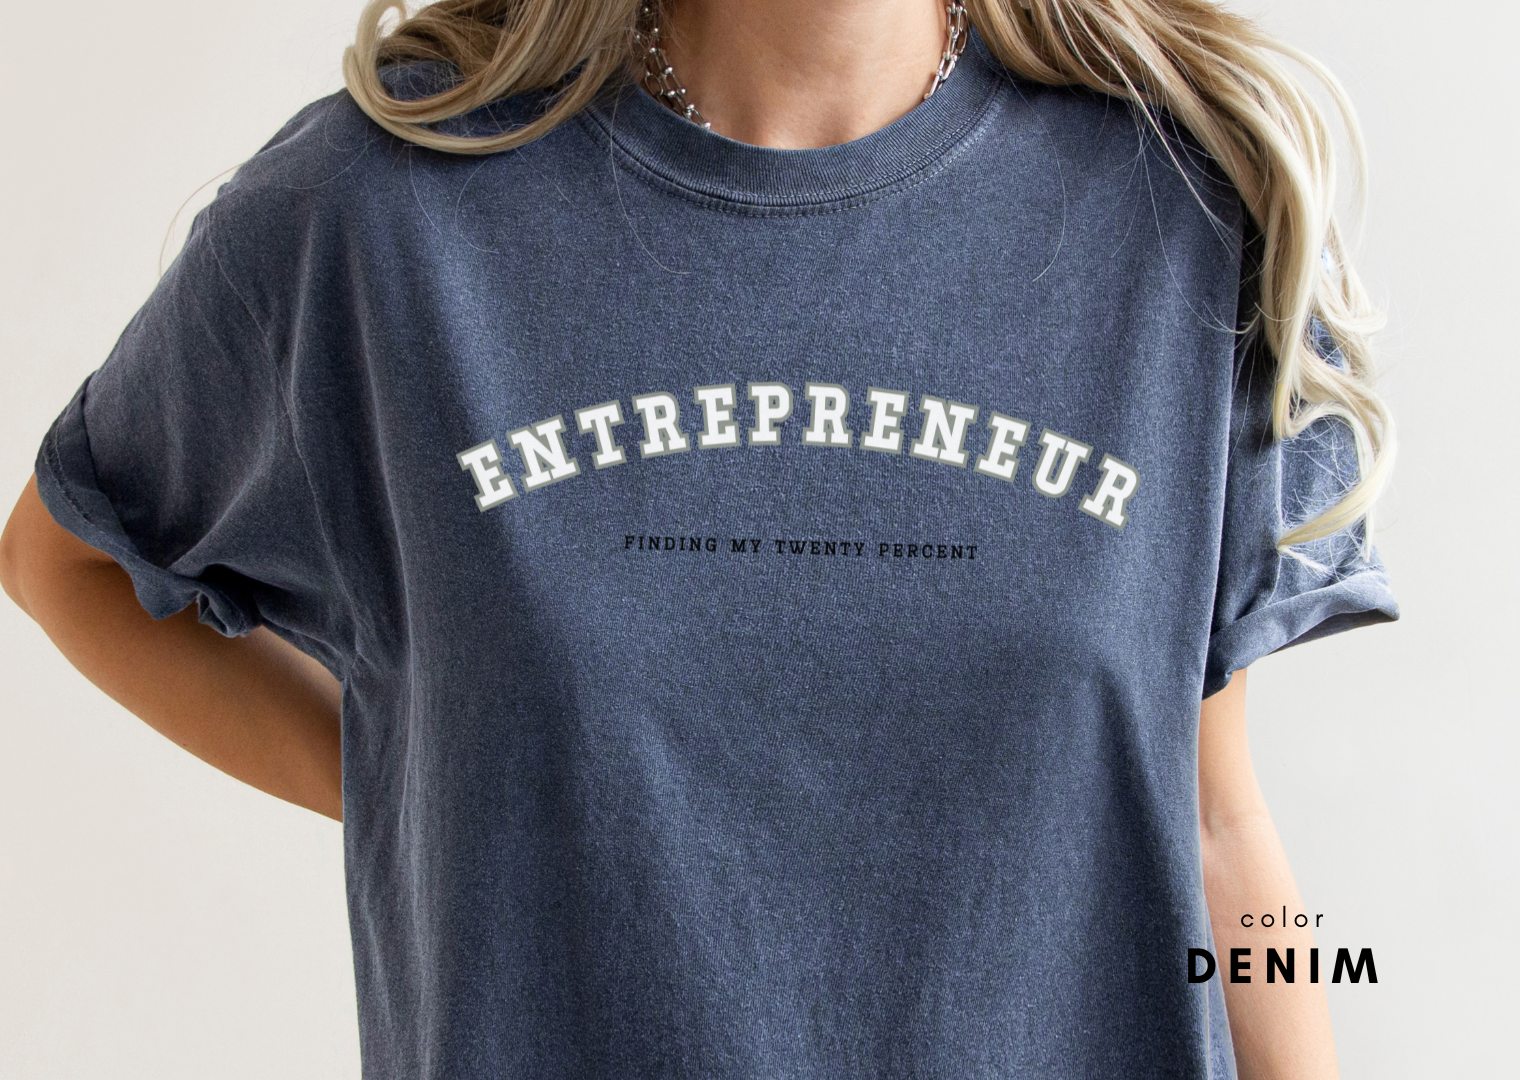 Entrepreneur - Finding my 20 Percent